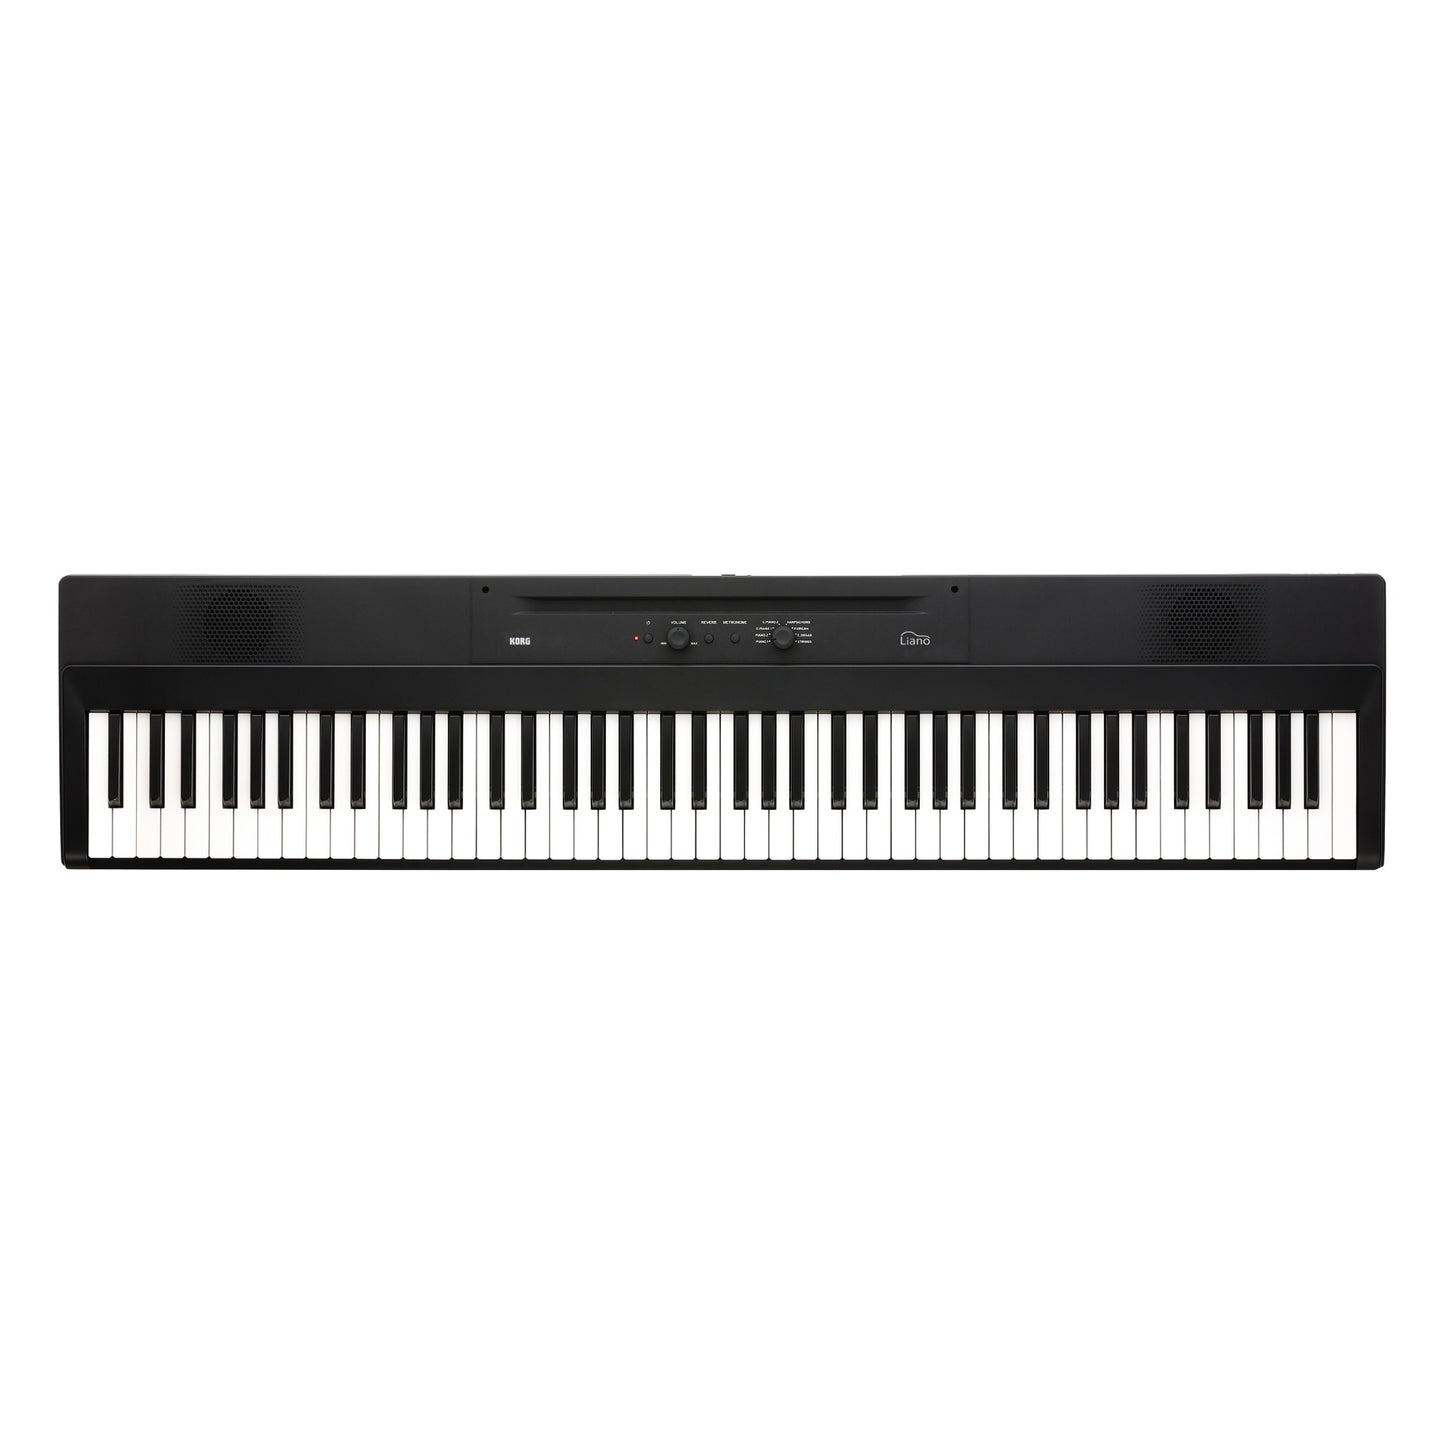 Korg L1 Liano Ultra-Slim 88 Key Digital Piano